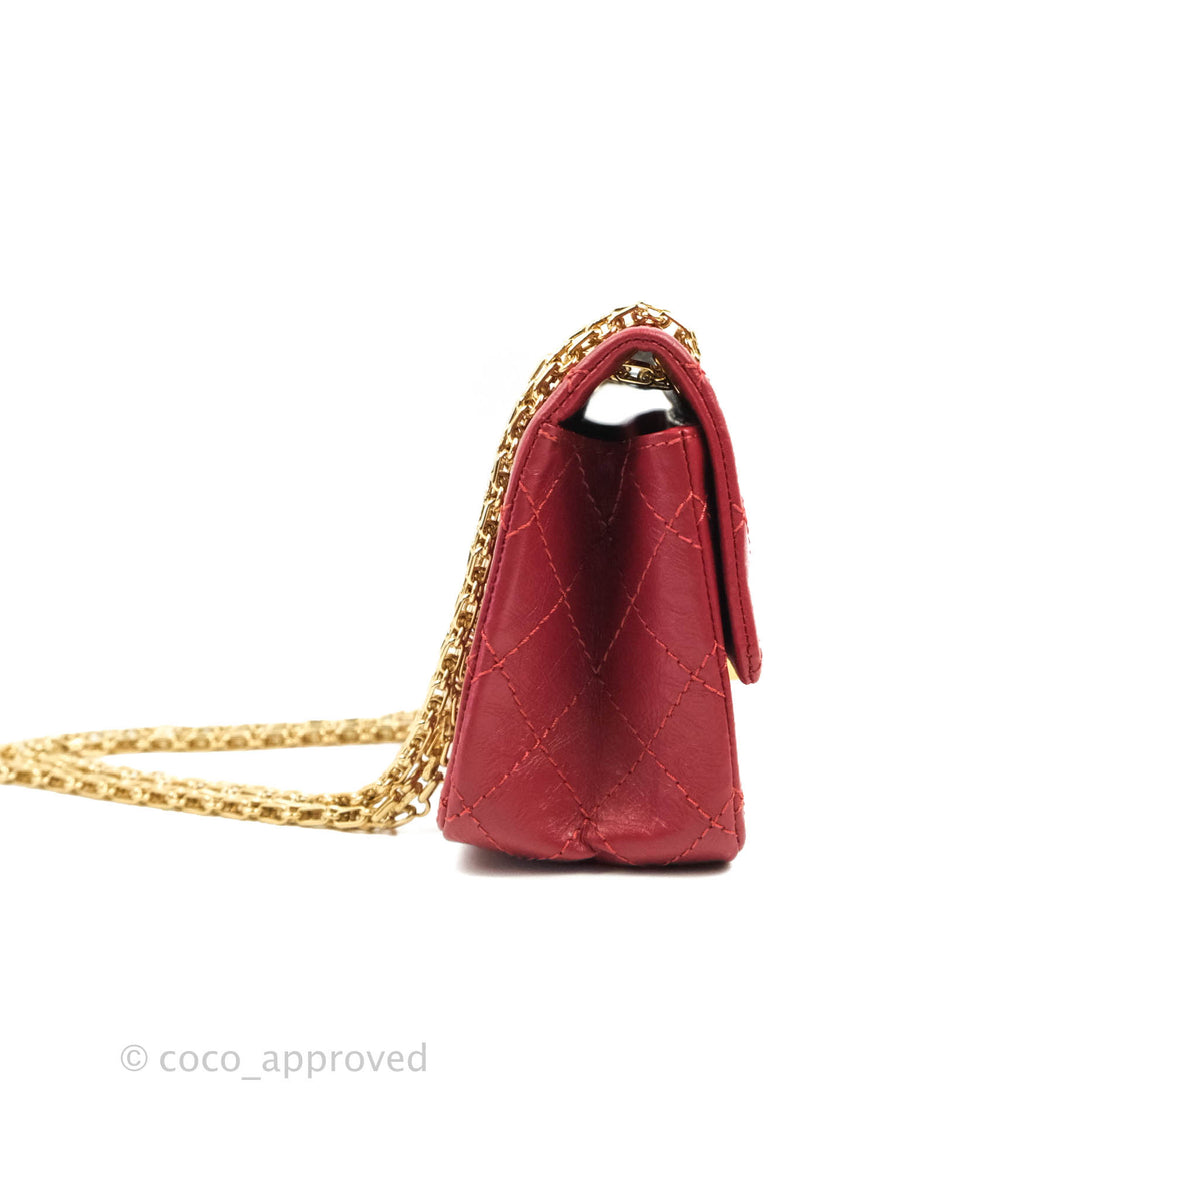 red chanel mini bag